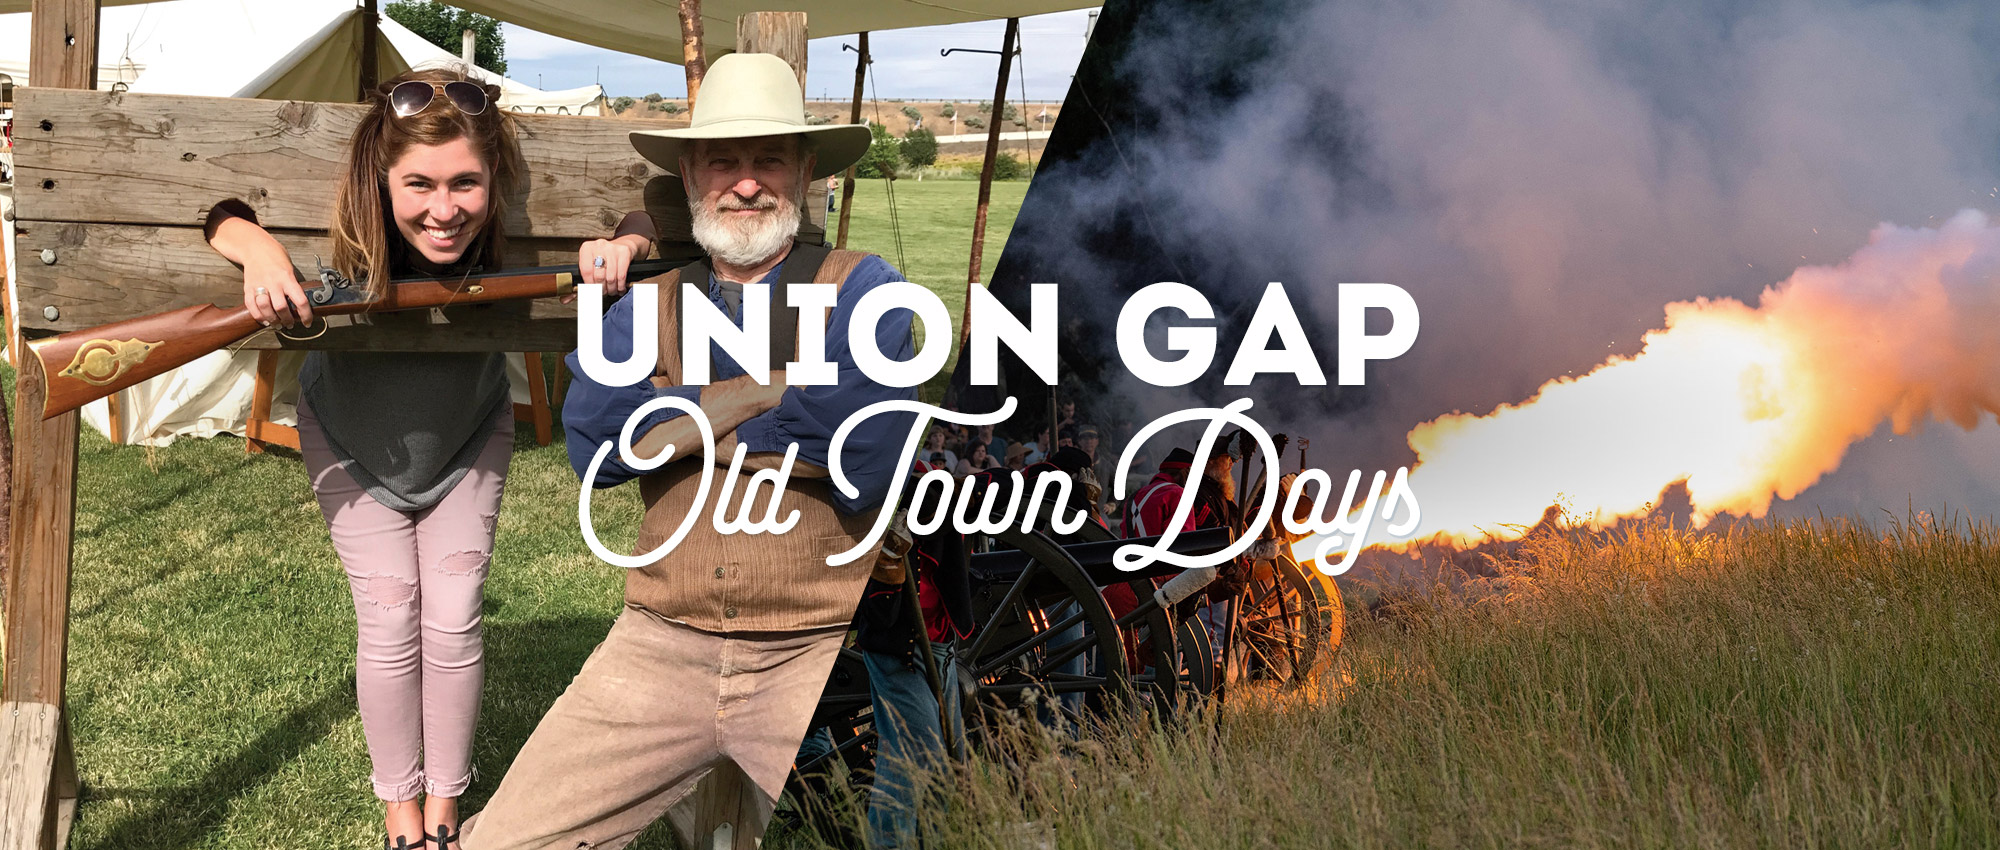 Old Town Days Union Gap, WA